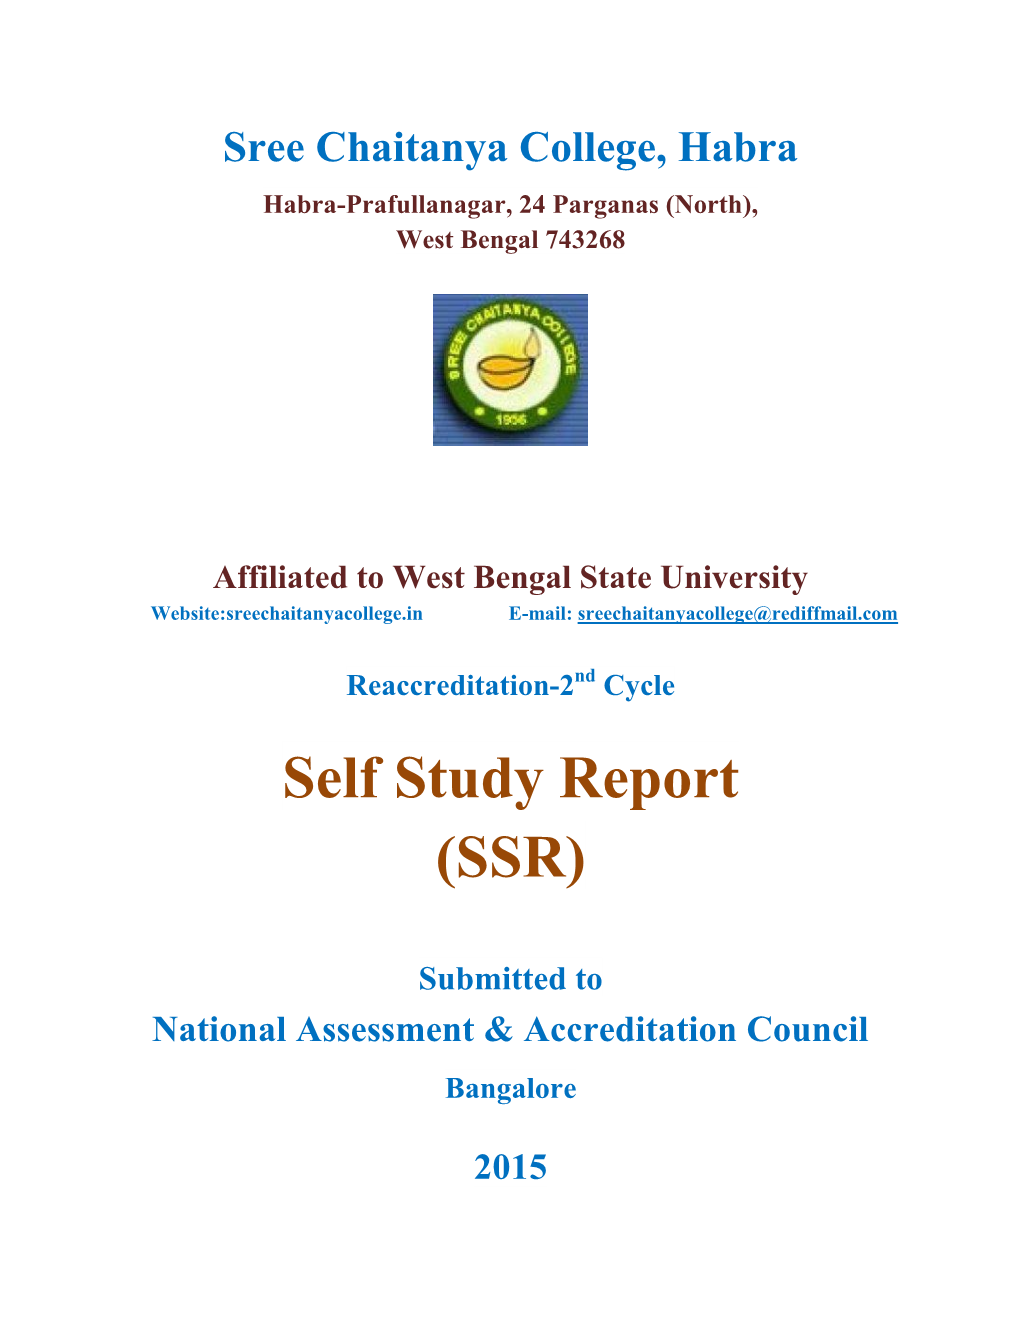 Self Study Report: Sree Chaitanya College, Habra